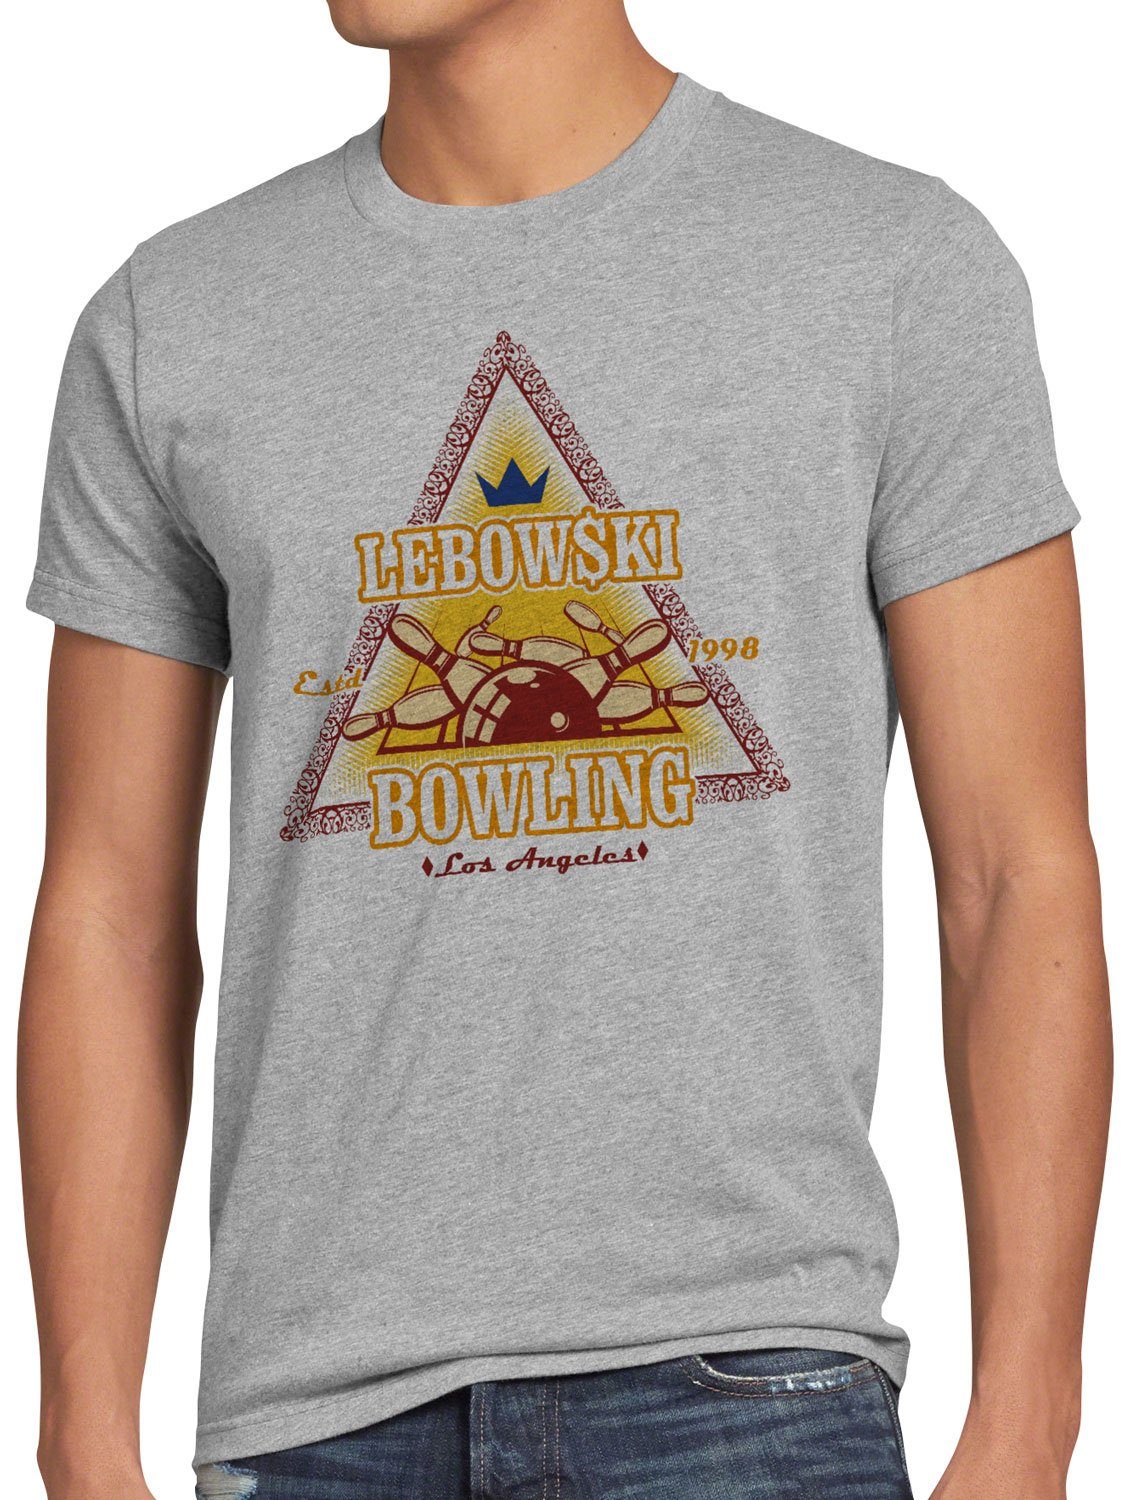 style3 Print-Shirt Herren T-Shirt Rude grau Bowling meliert Bowler Big Lebowski Dude